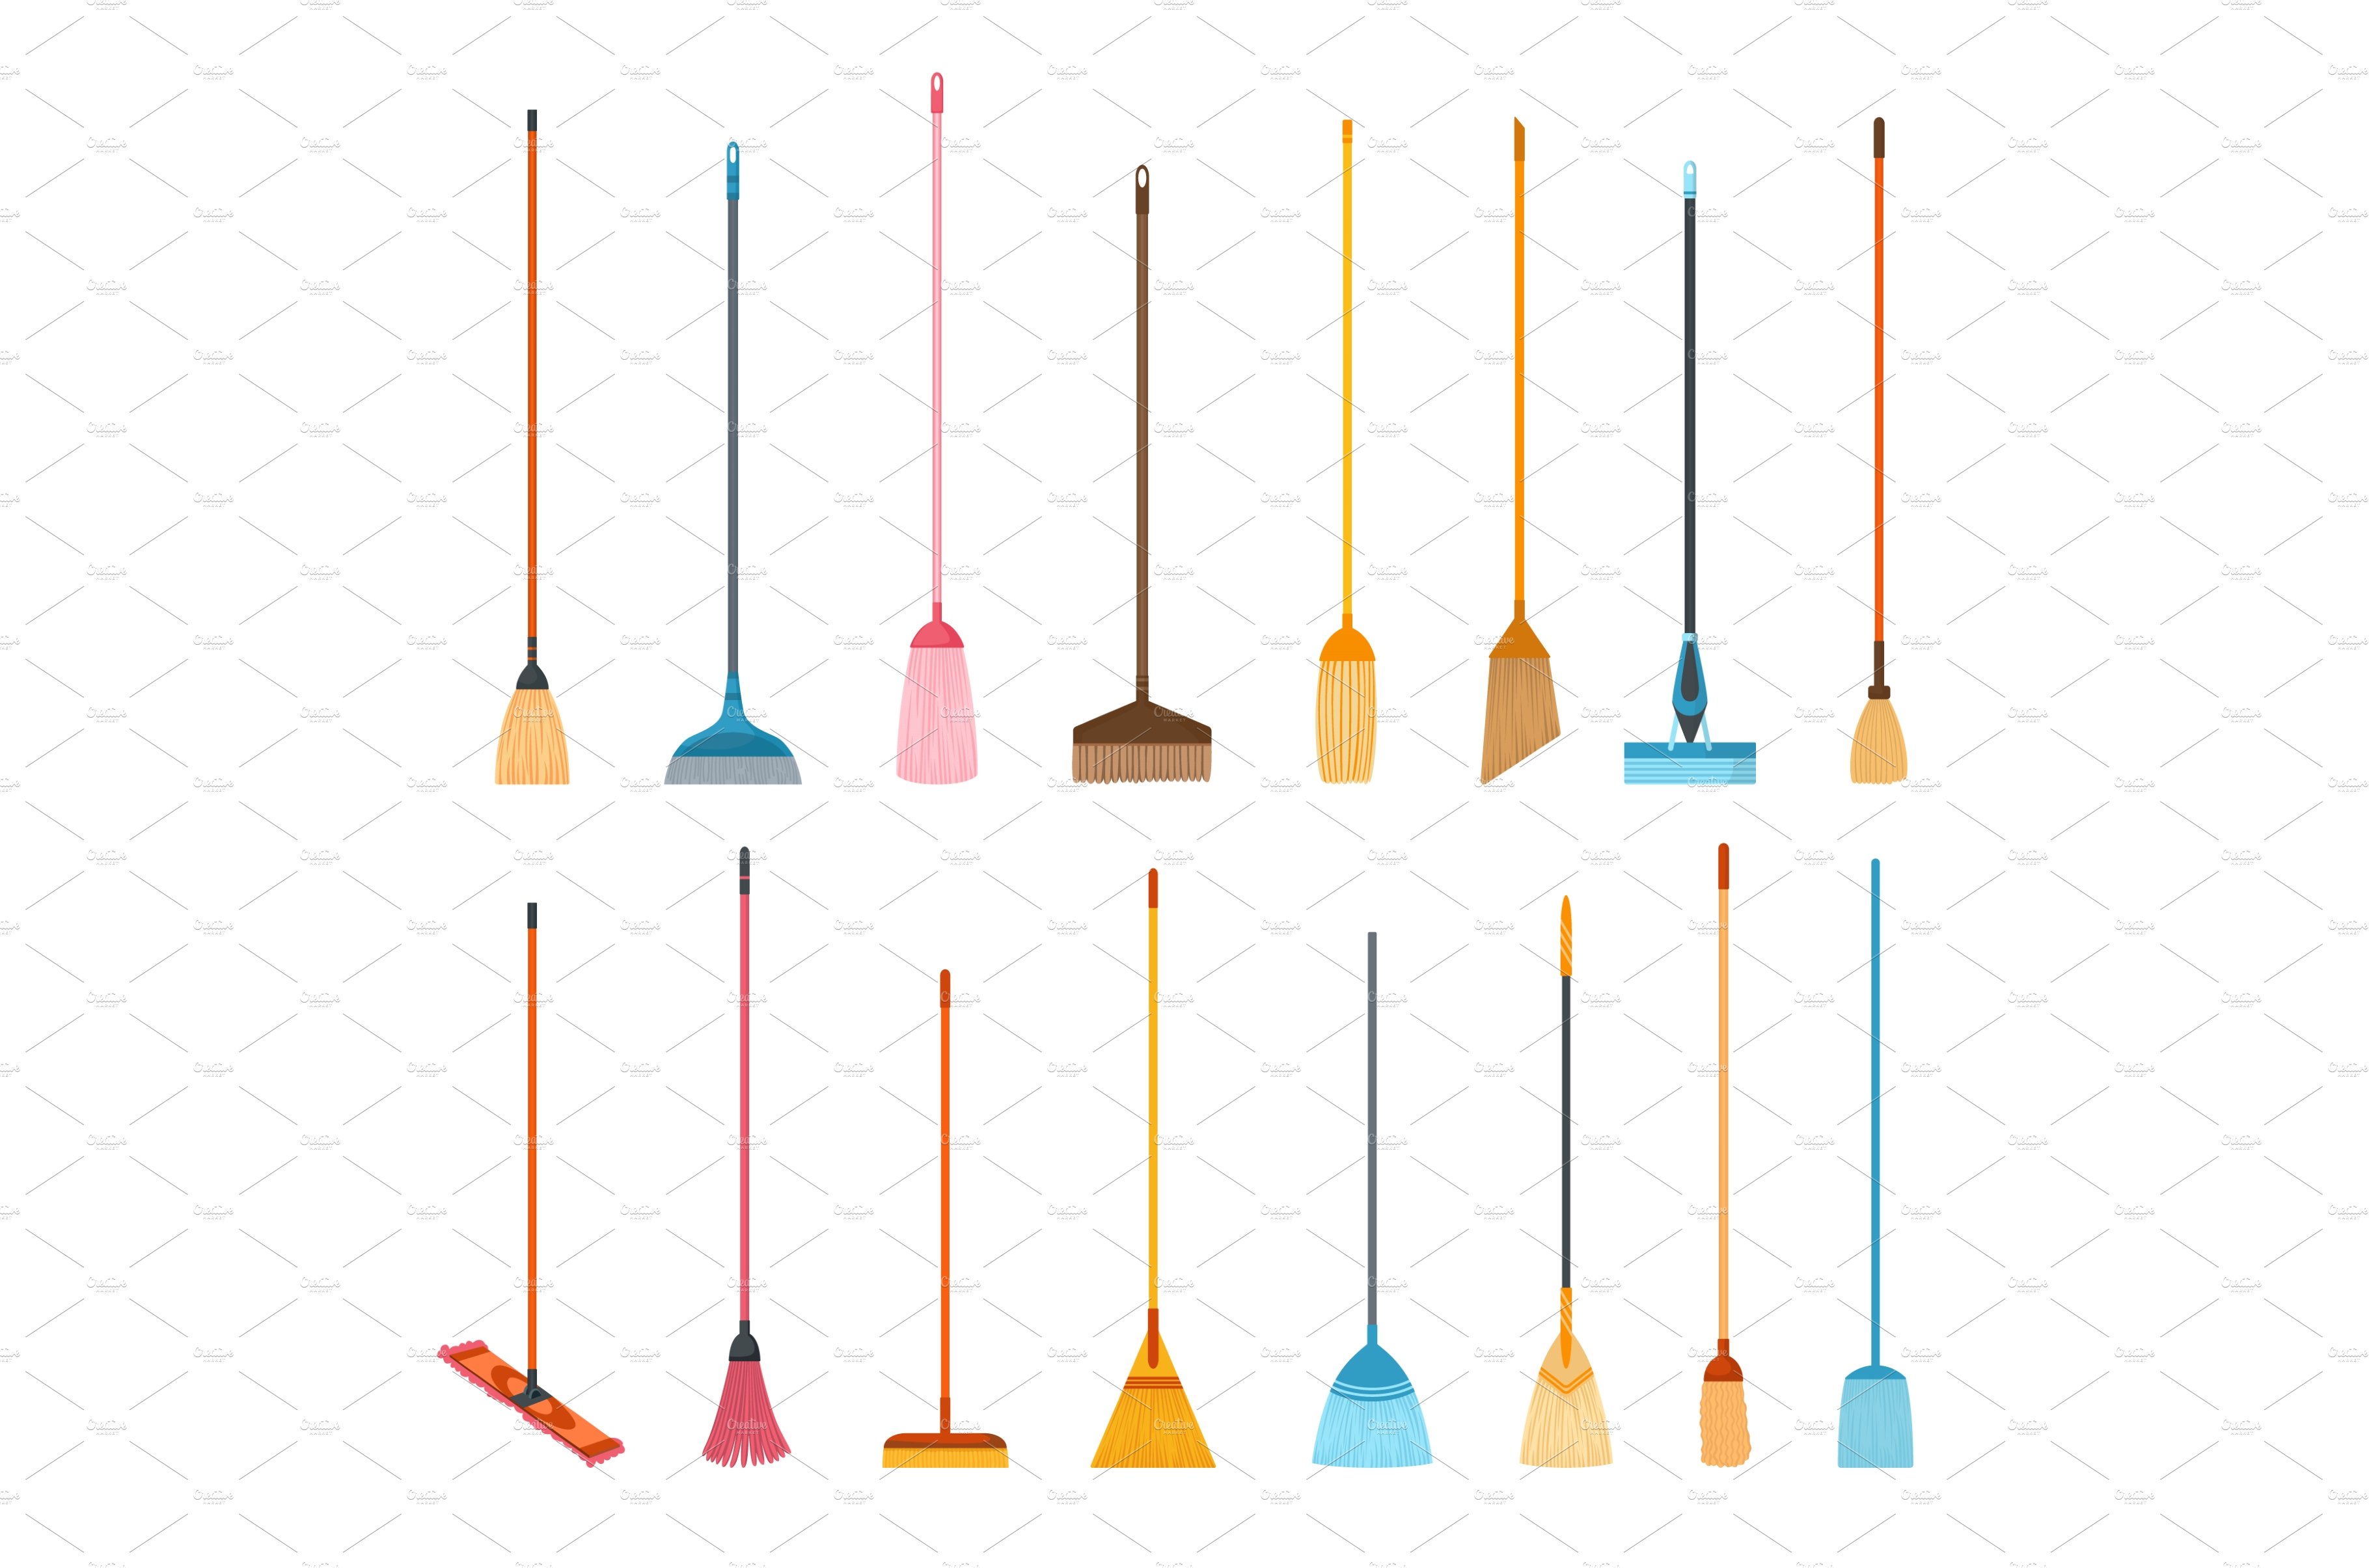 Broom mop icons. Hygiene handling cover image.